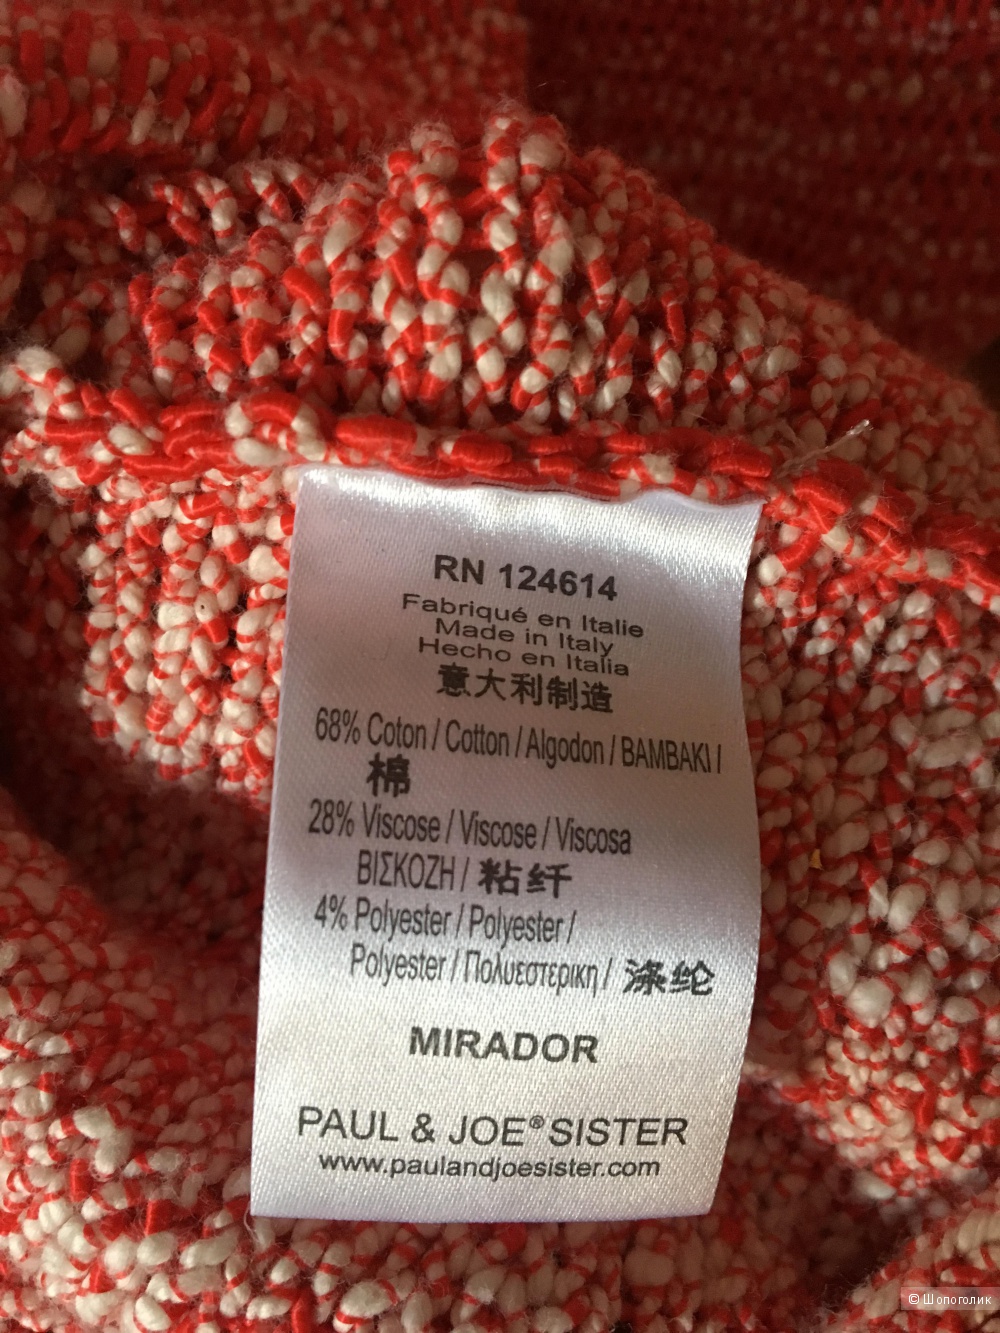 Красный свитер Paul & Joe Sister размер 3